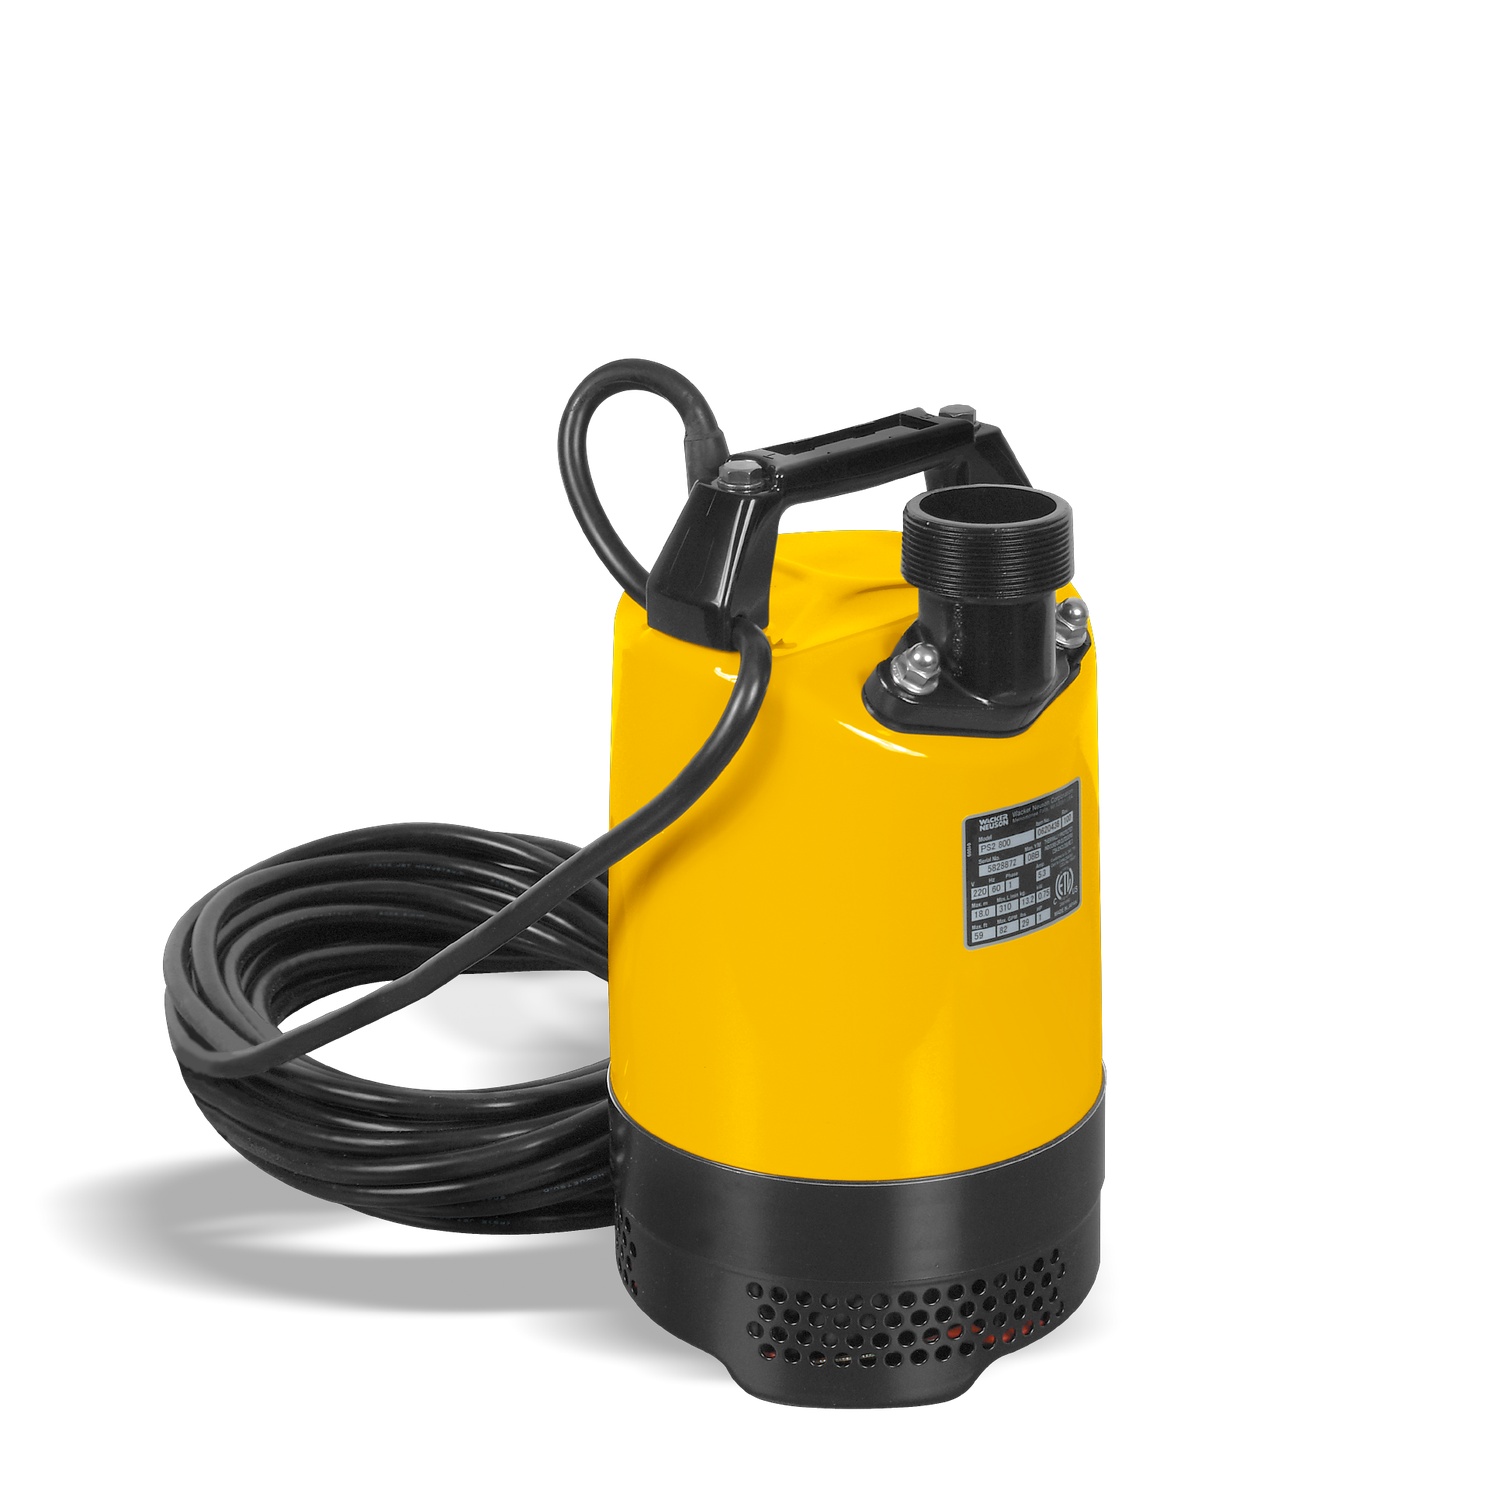  Wacker Neuson Submersible pumps PS2 800